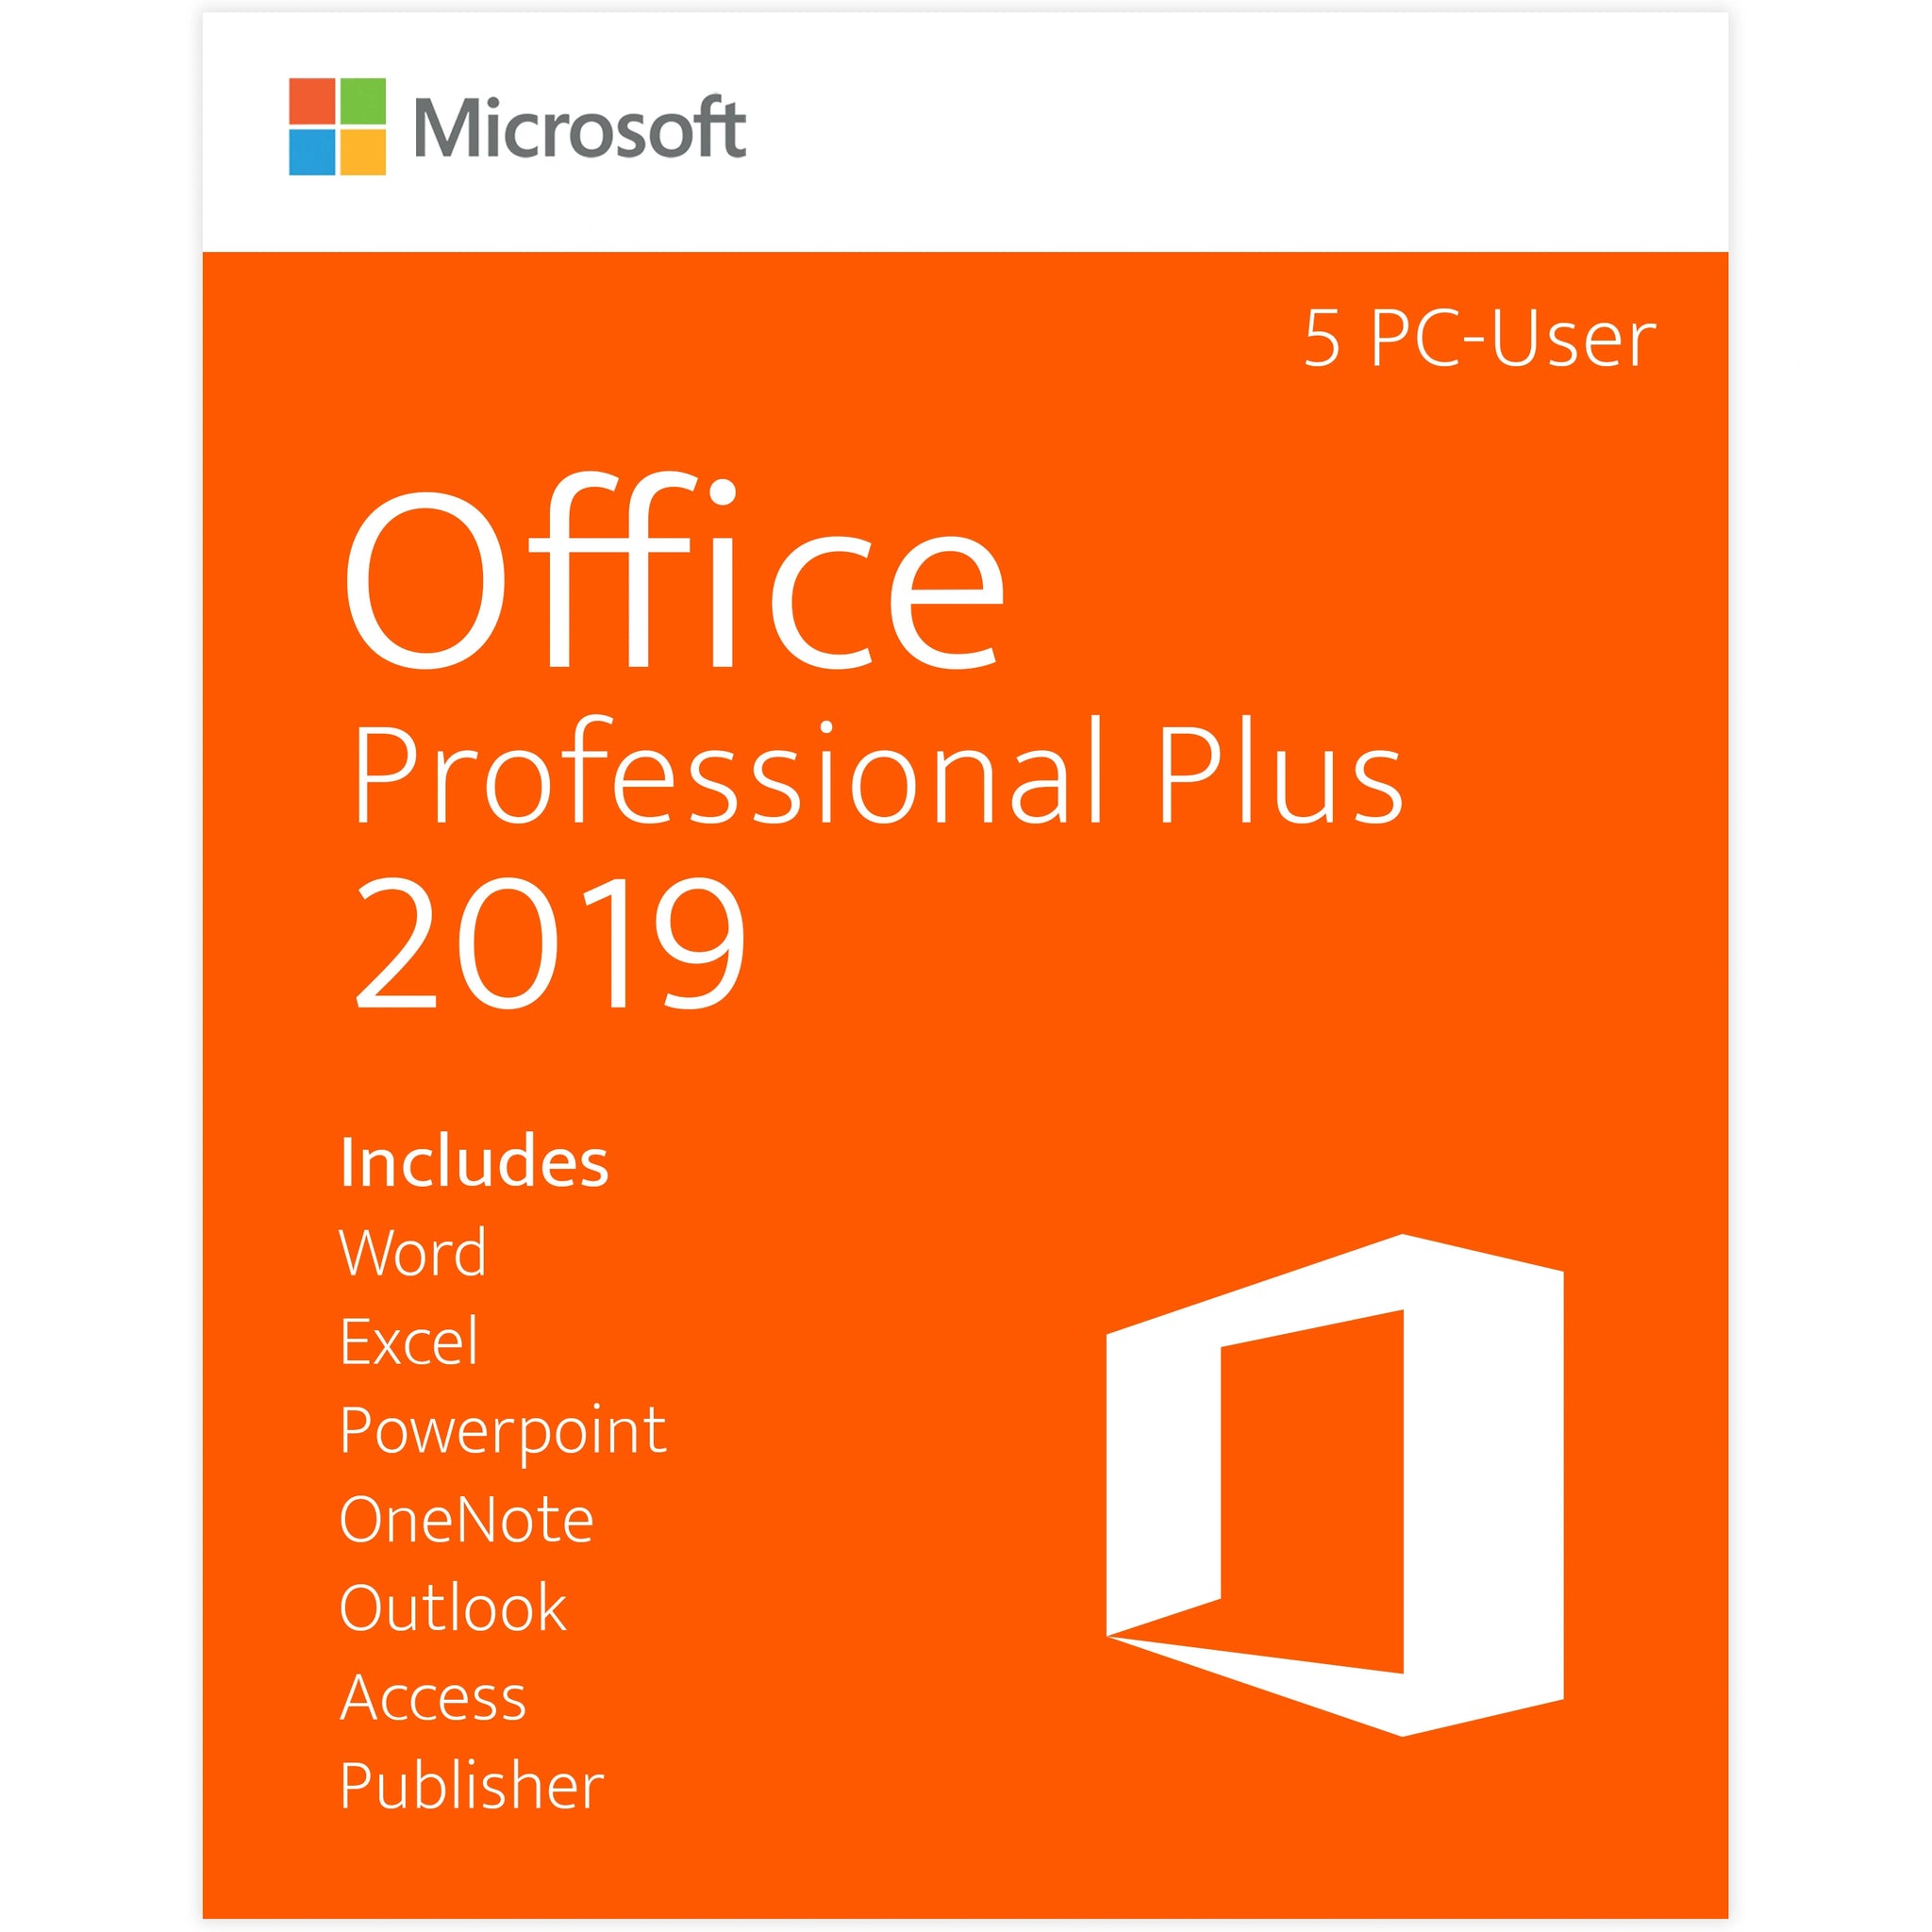 Microsoft Office 2019 Professional Plus- Lifetime License Key for 5 PC